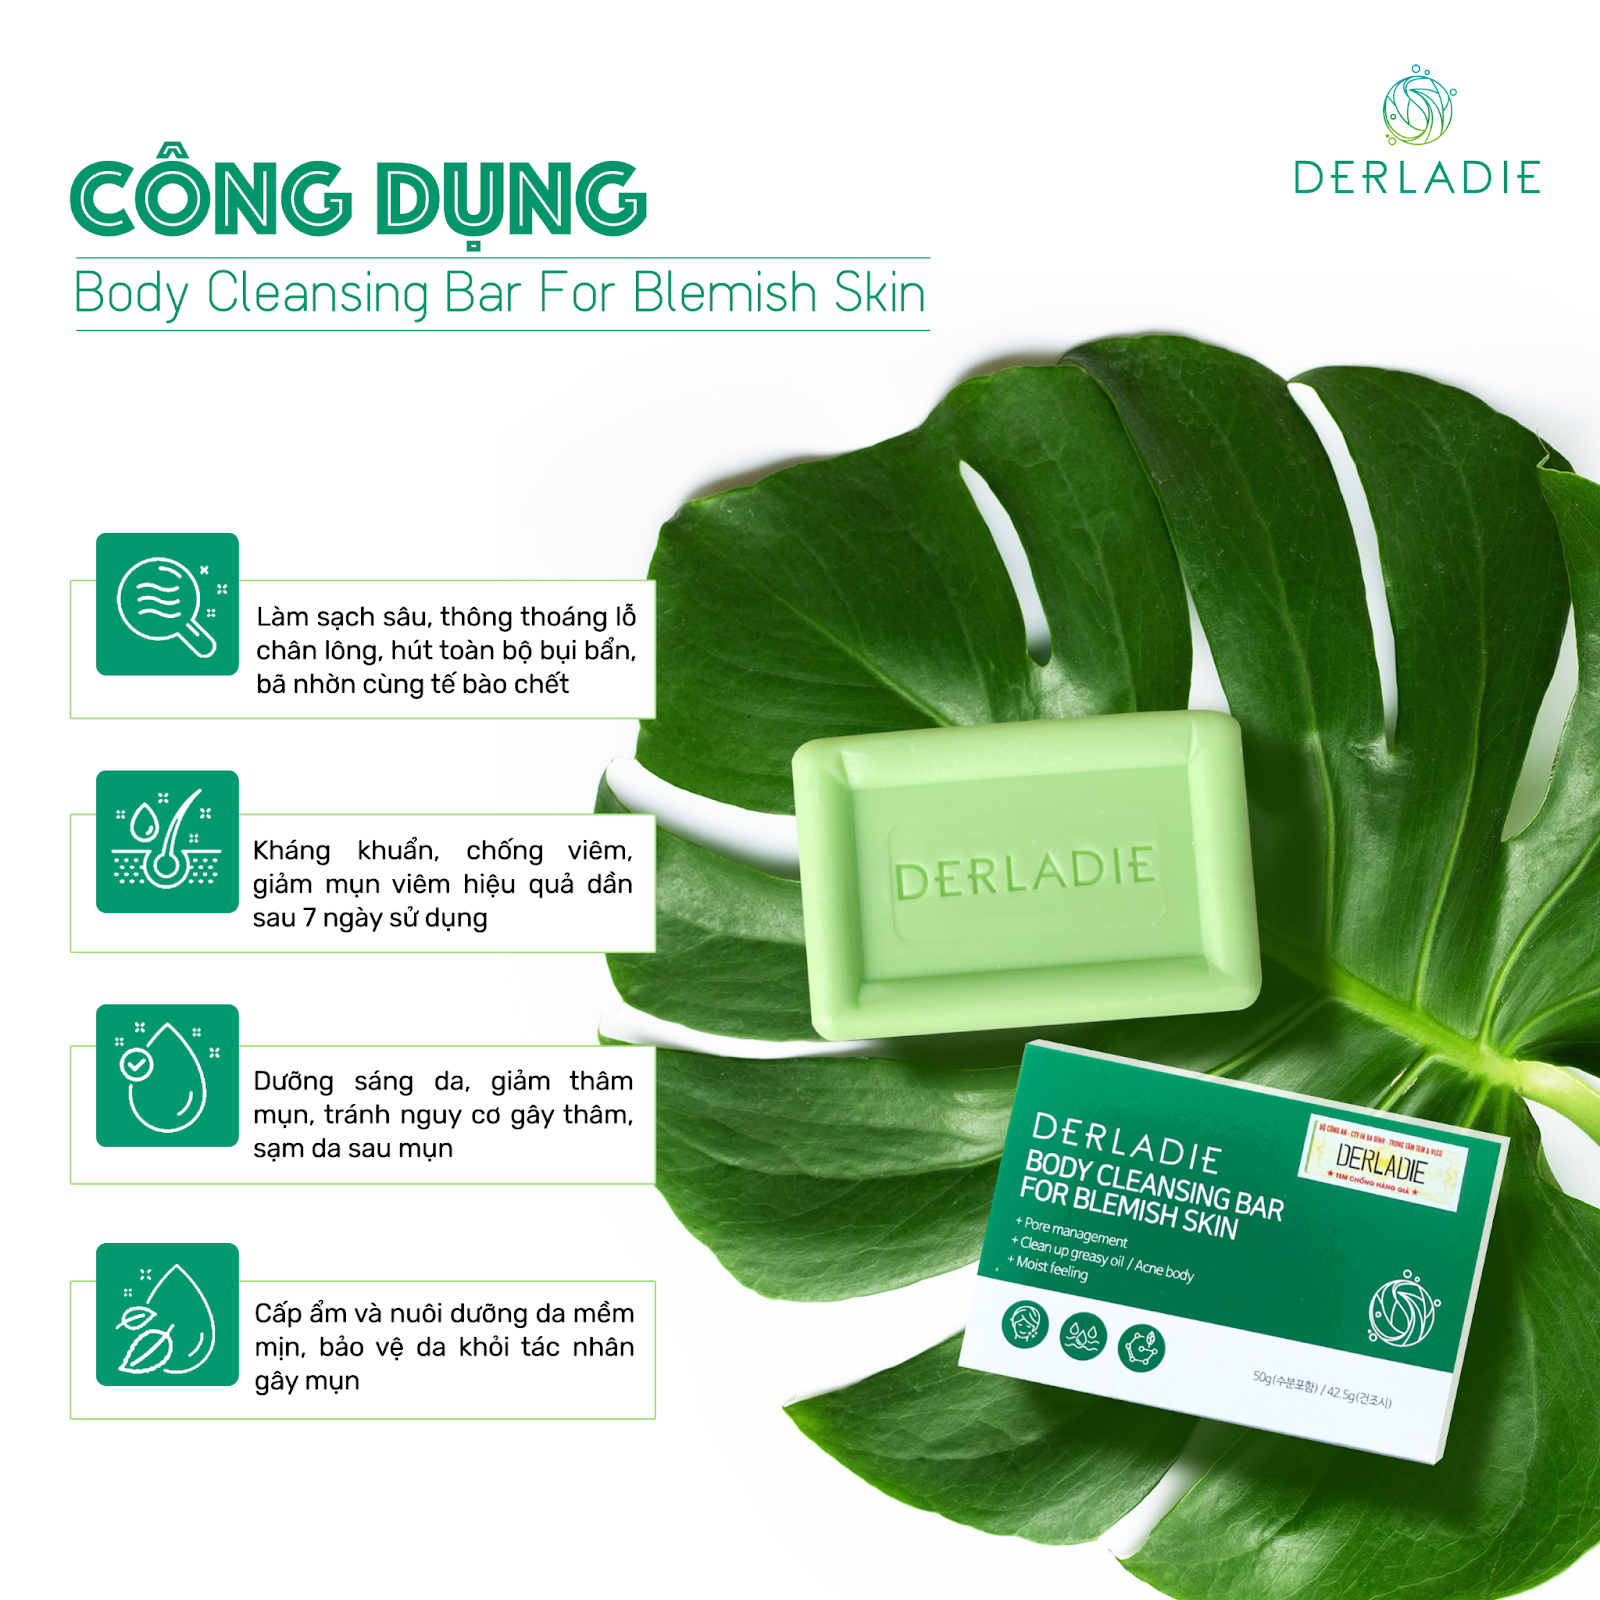 Derladie Body Cleansing Bar For Blemish Skin có rất nhiều công dụng cho da derladie review